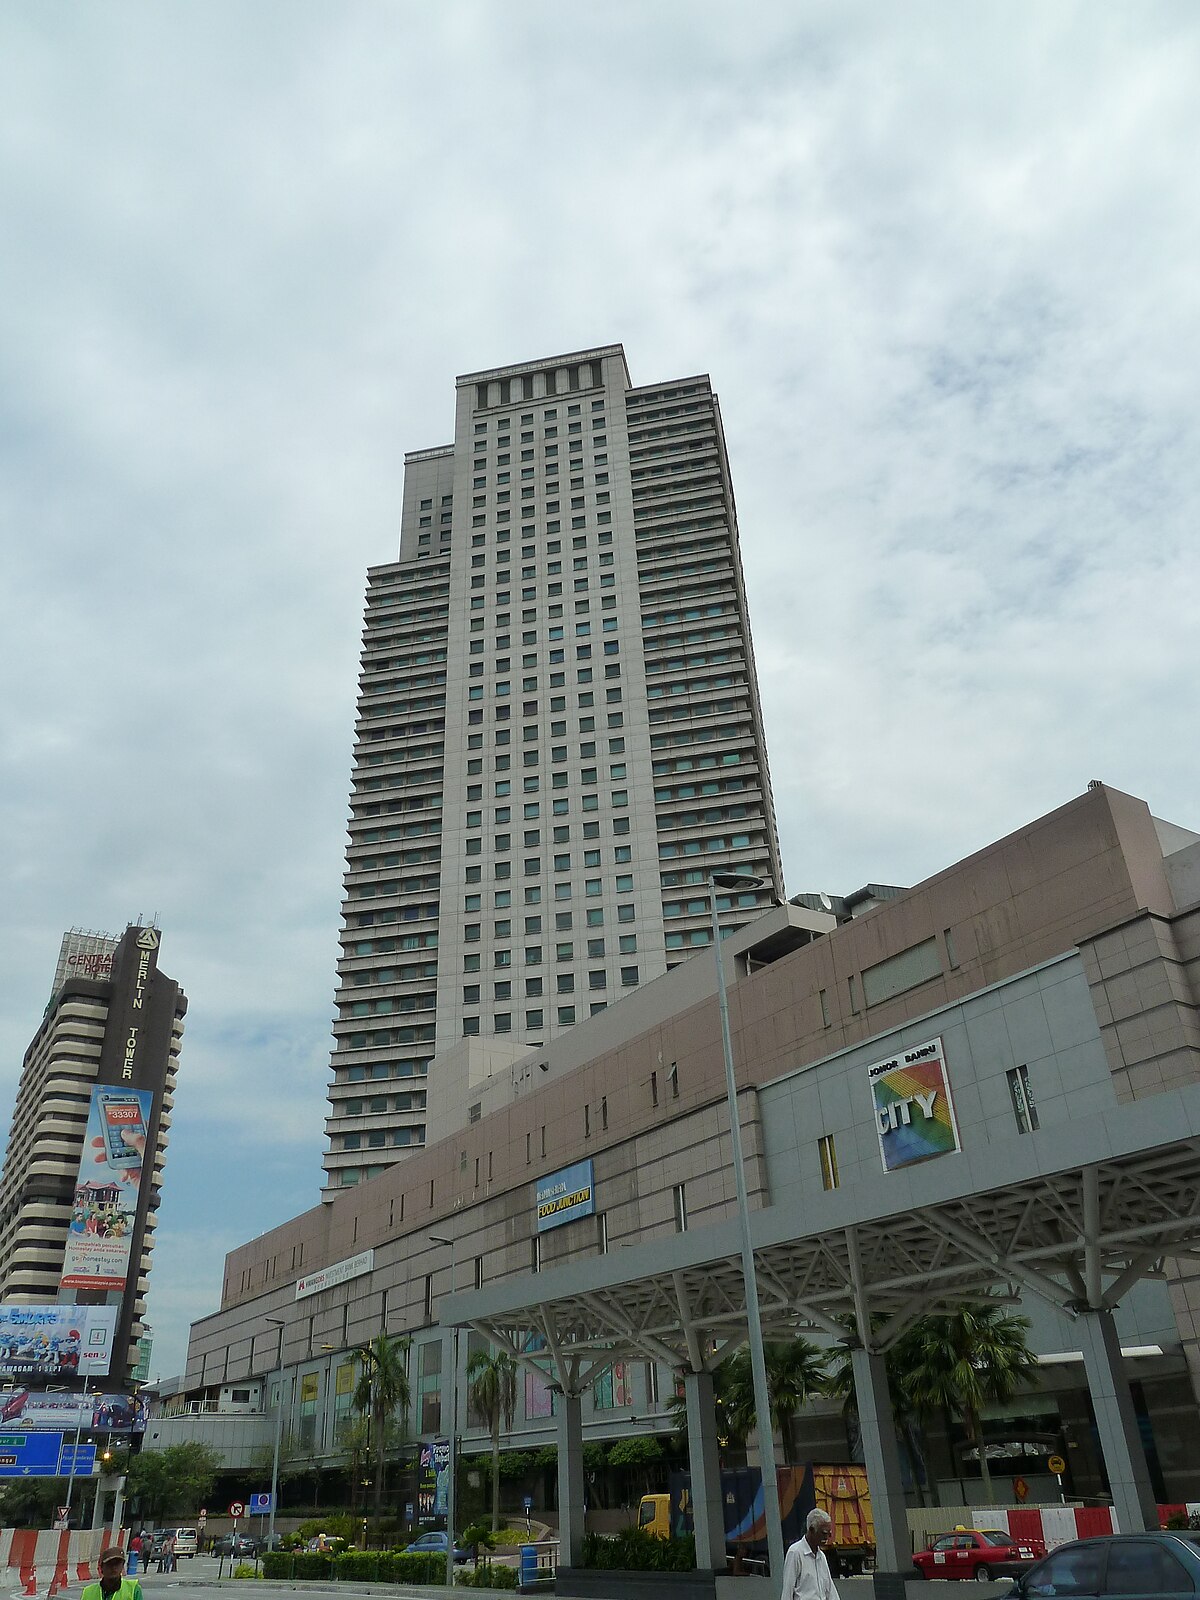  Johor  Bahru  City Square Wikipedia